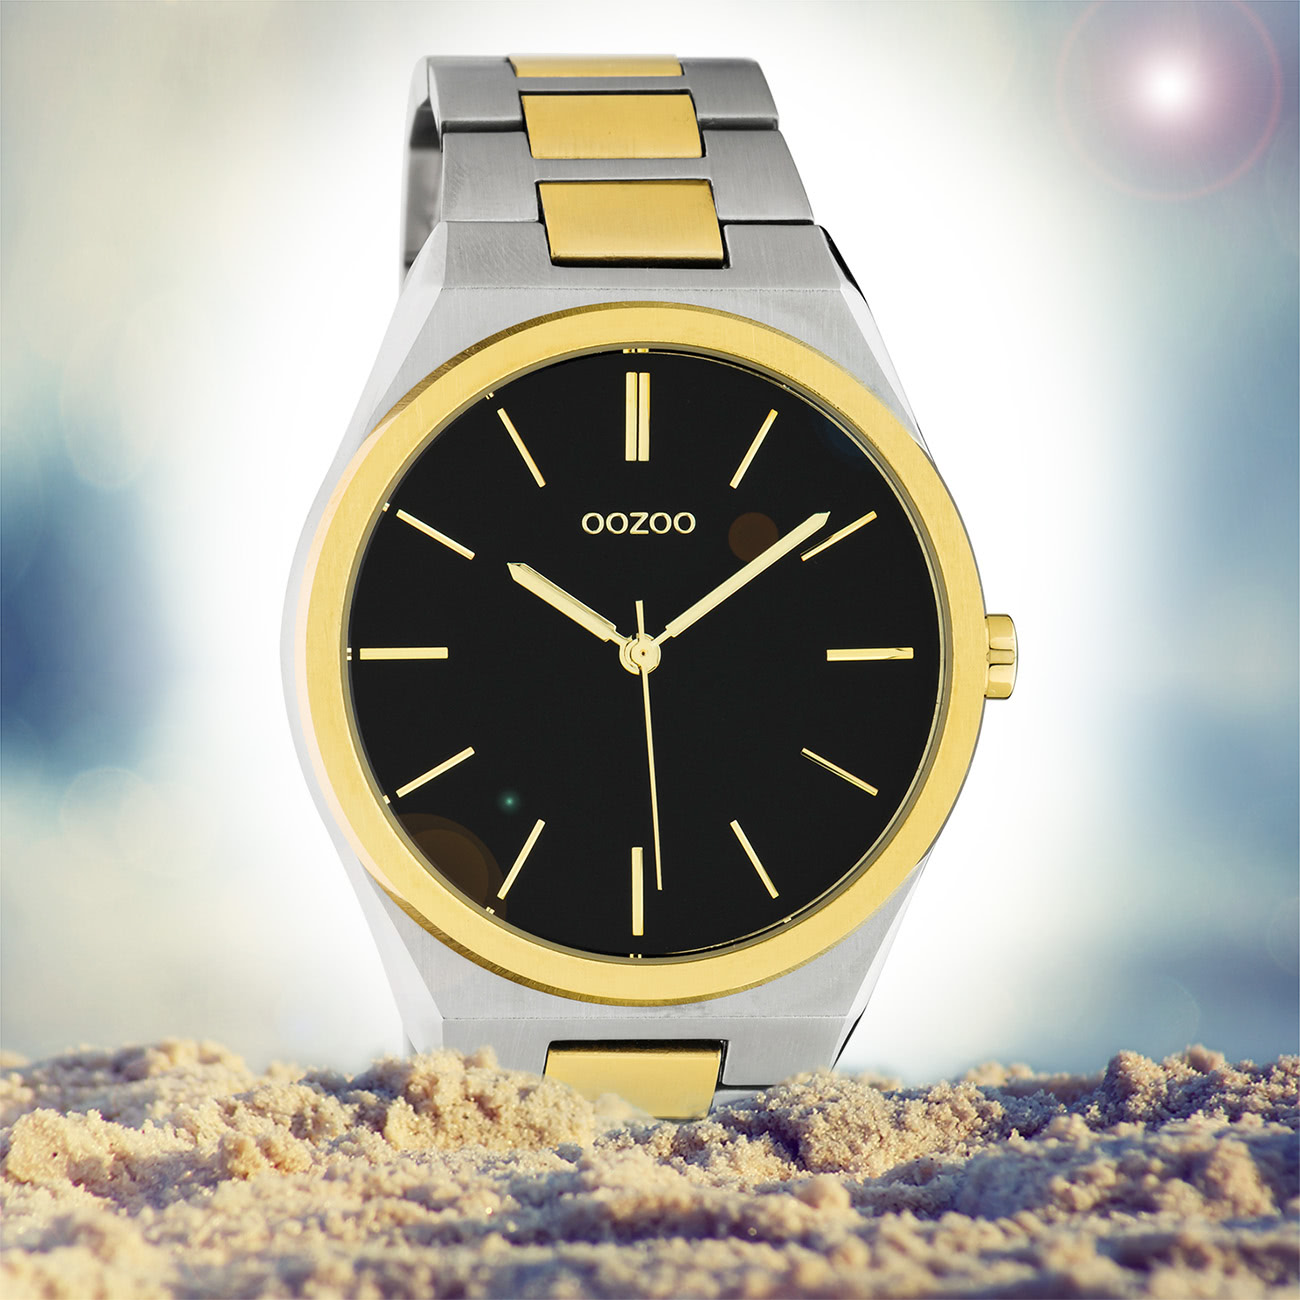 PicClick DE C10522 - EDELSTAHL Timepieces silber OOZOO UHR Quarzuhr 79,95 EUR gold Armband UOC10522